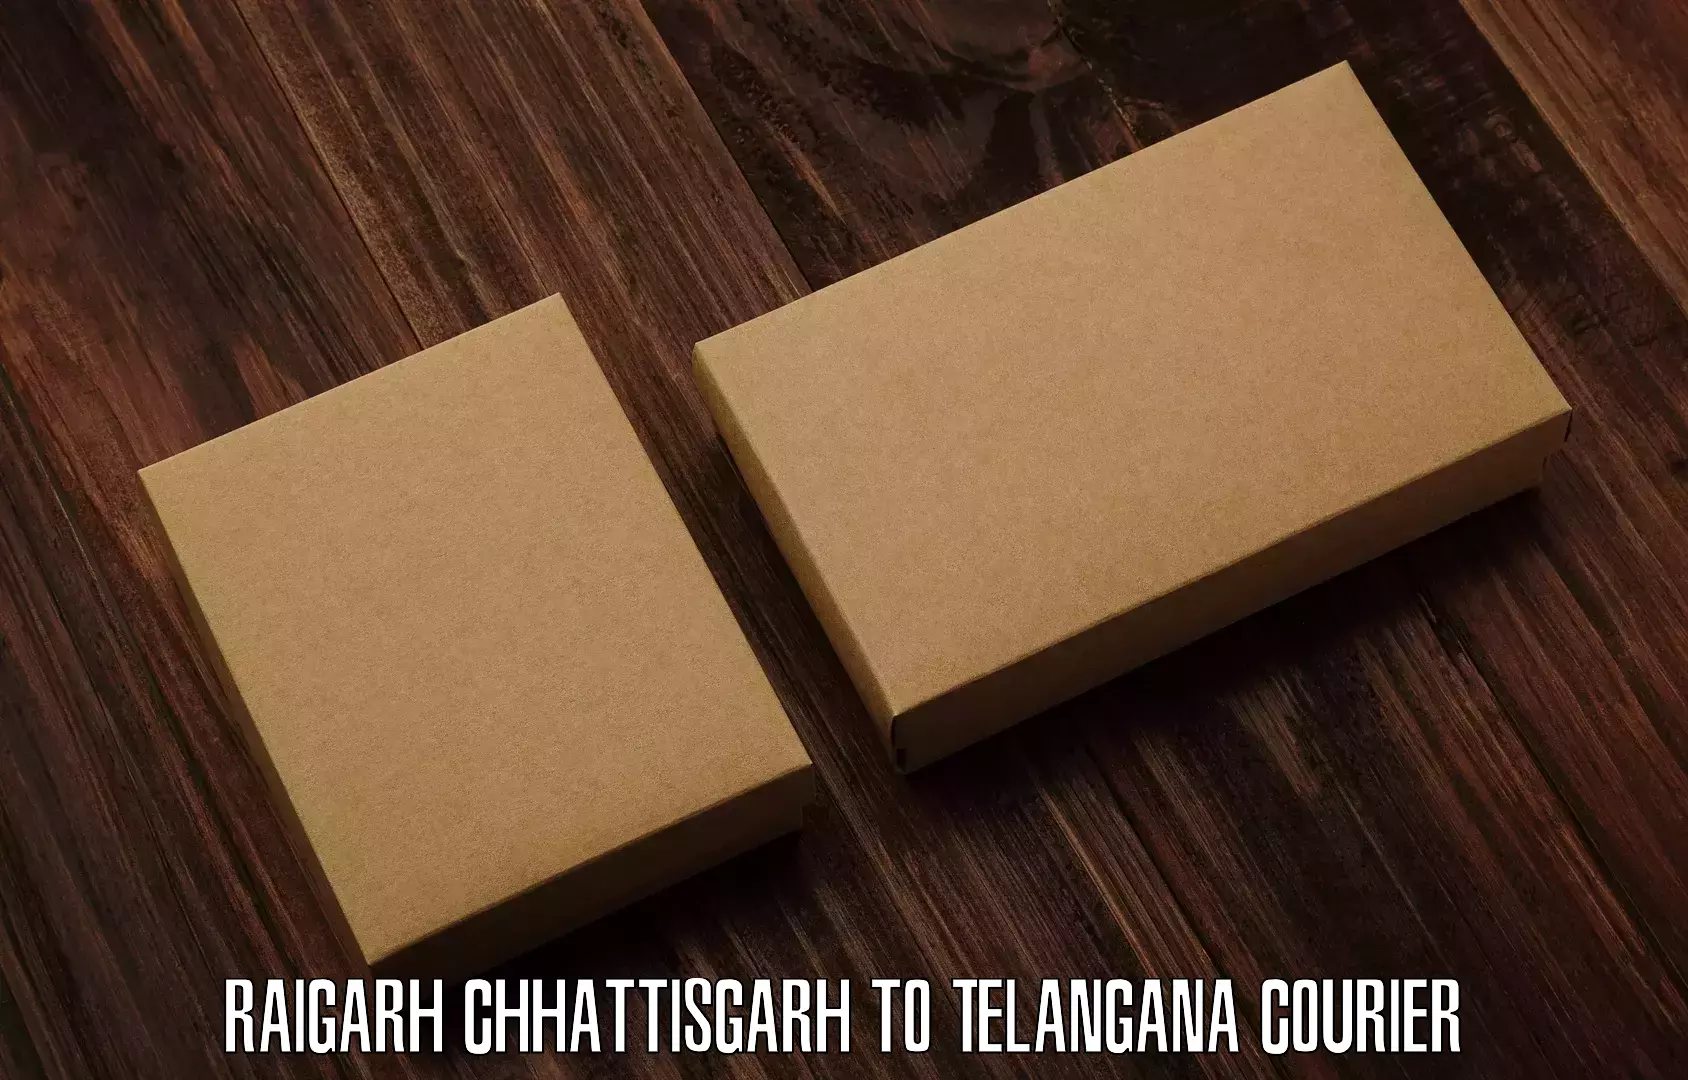 Courier service comparison Raigarh Chhattisgarh to Jagtial